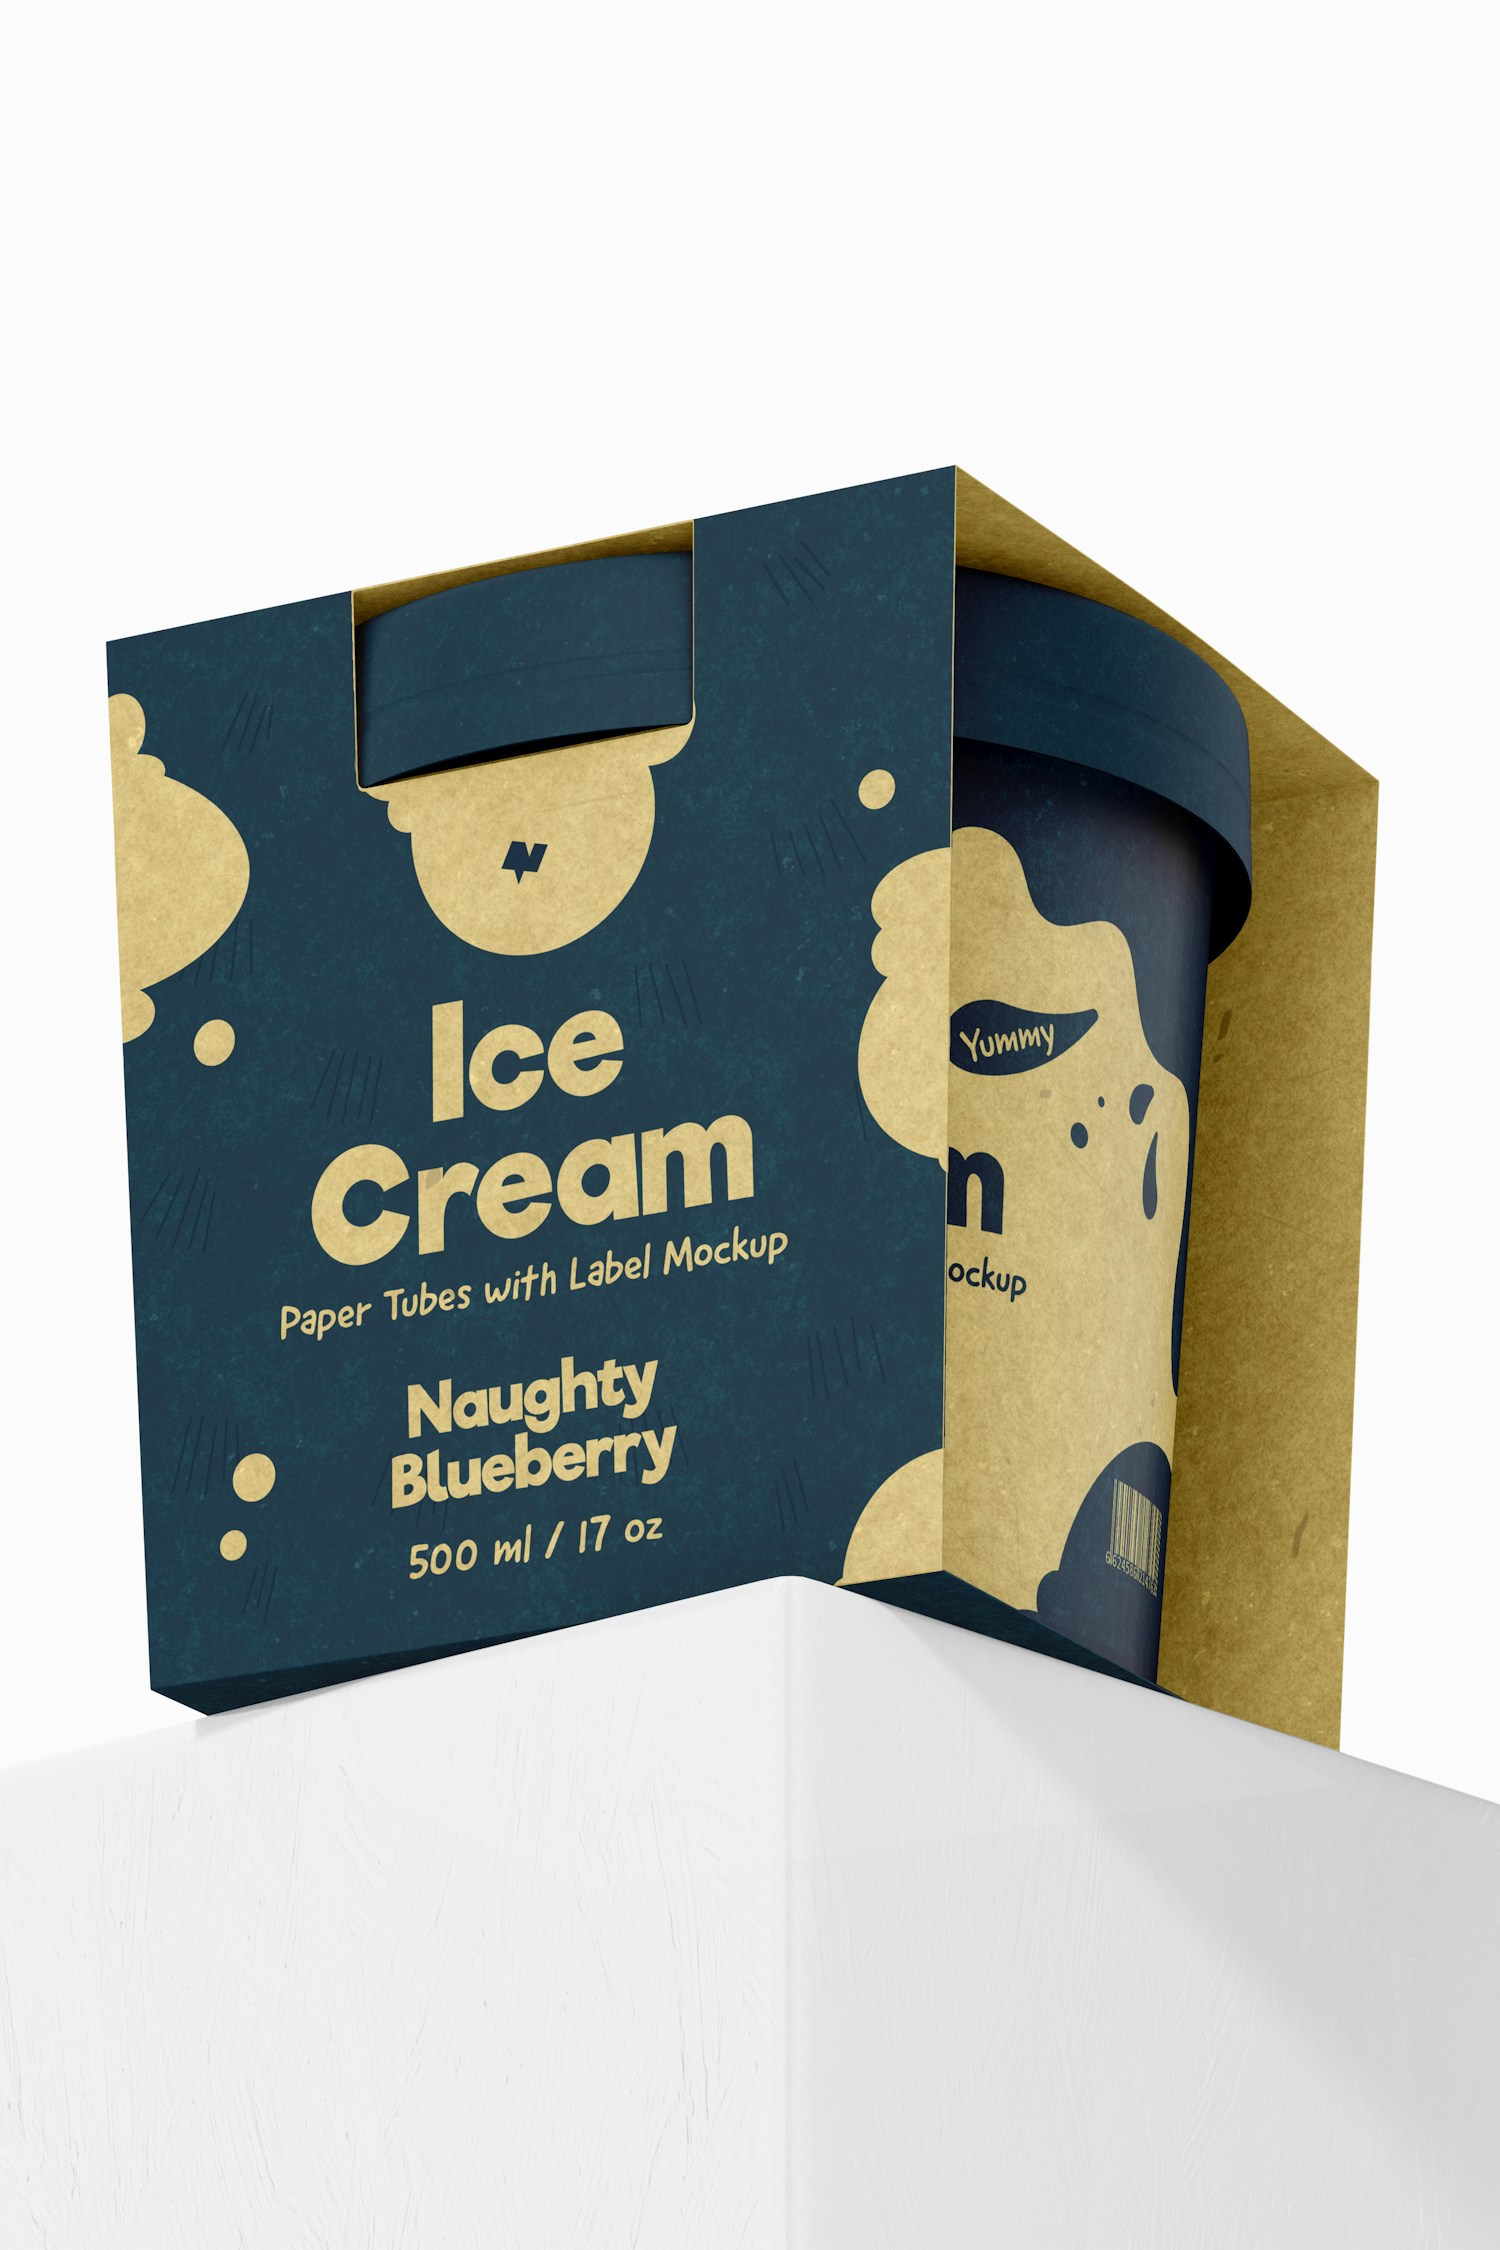 500 ml Ice Cream Paper Tub with Label Mockup, on Podium